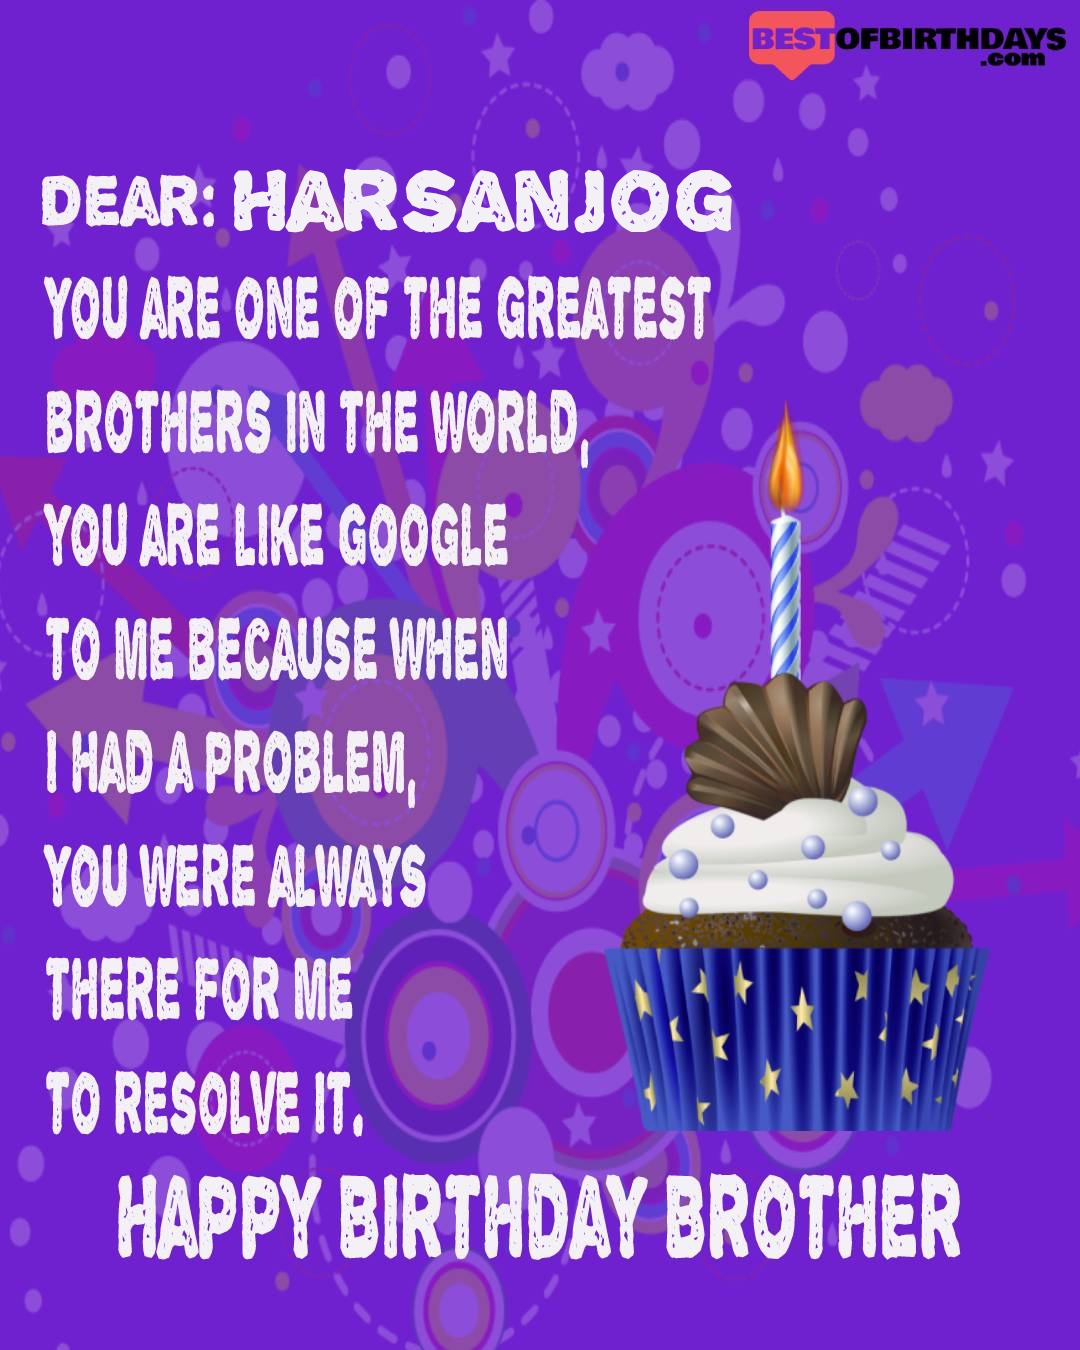 Happy birthday harsanjog bhai brother bro